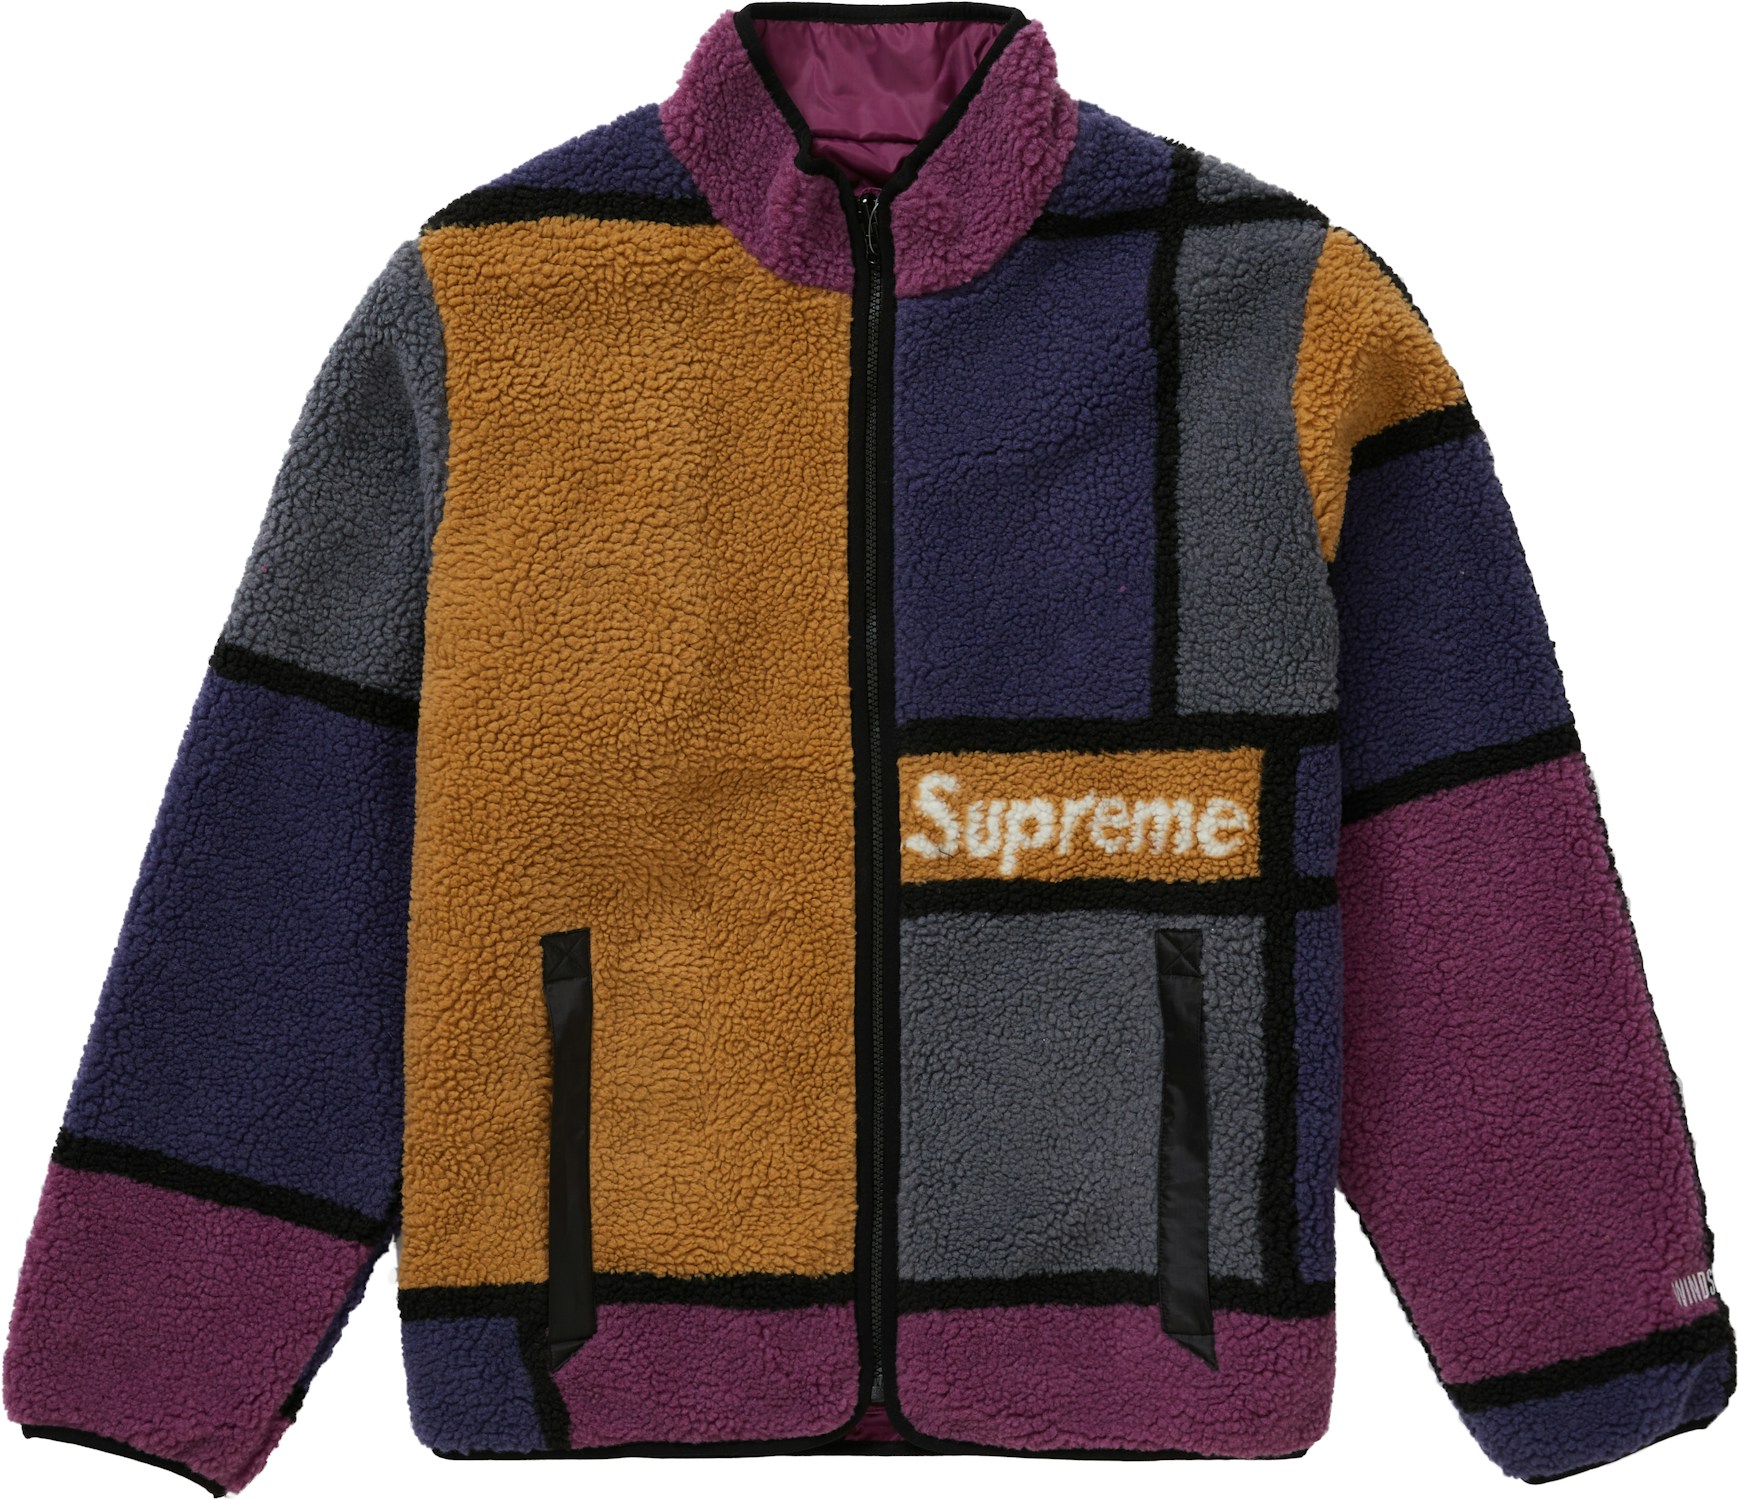 Supreme Reversible Colorblocked Fleece Jacket Purple - FW20